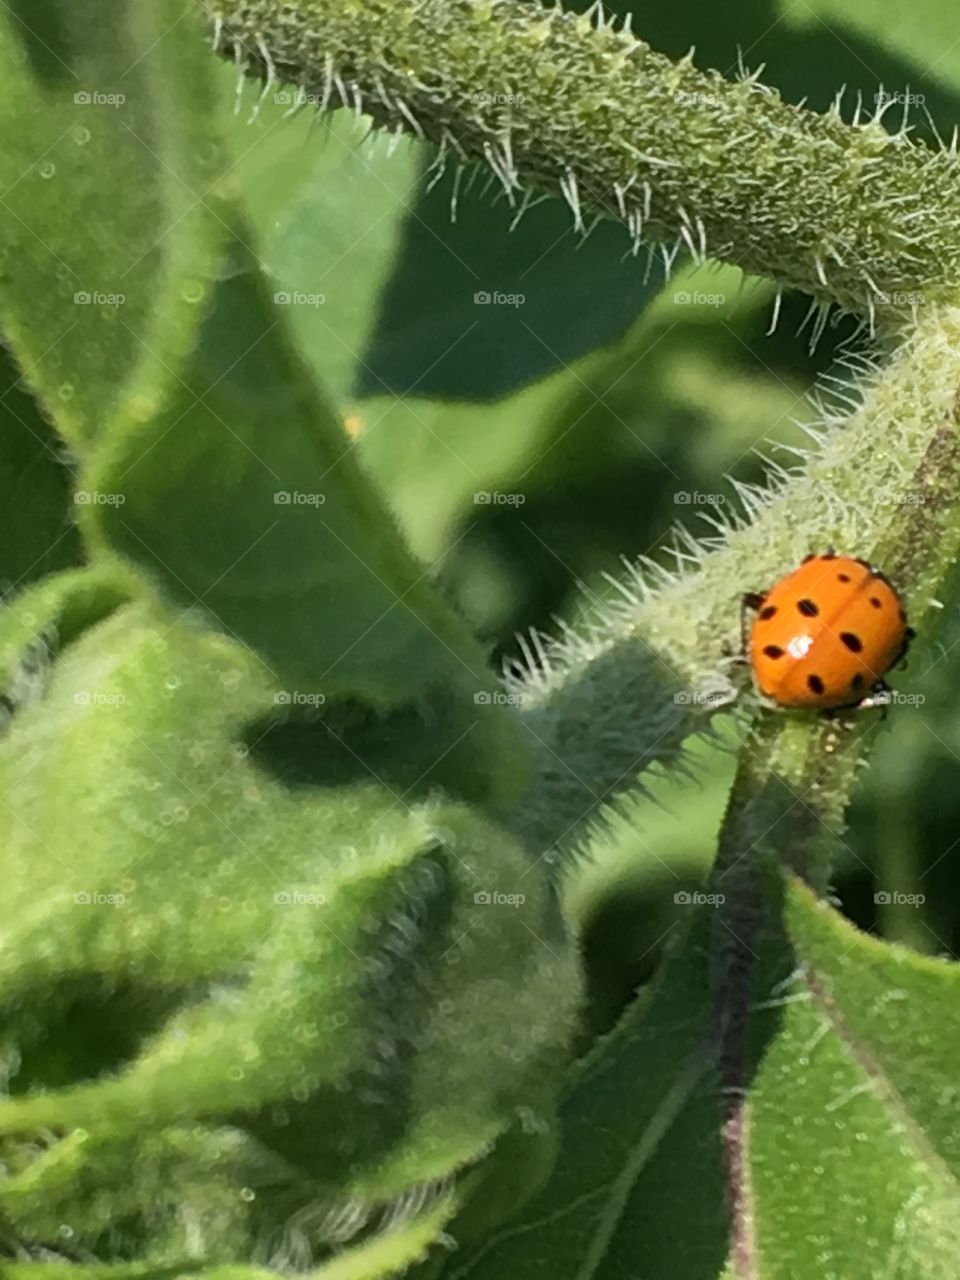 Ladybug on a stem.